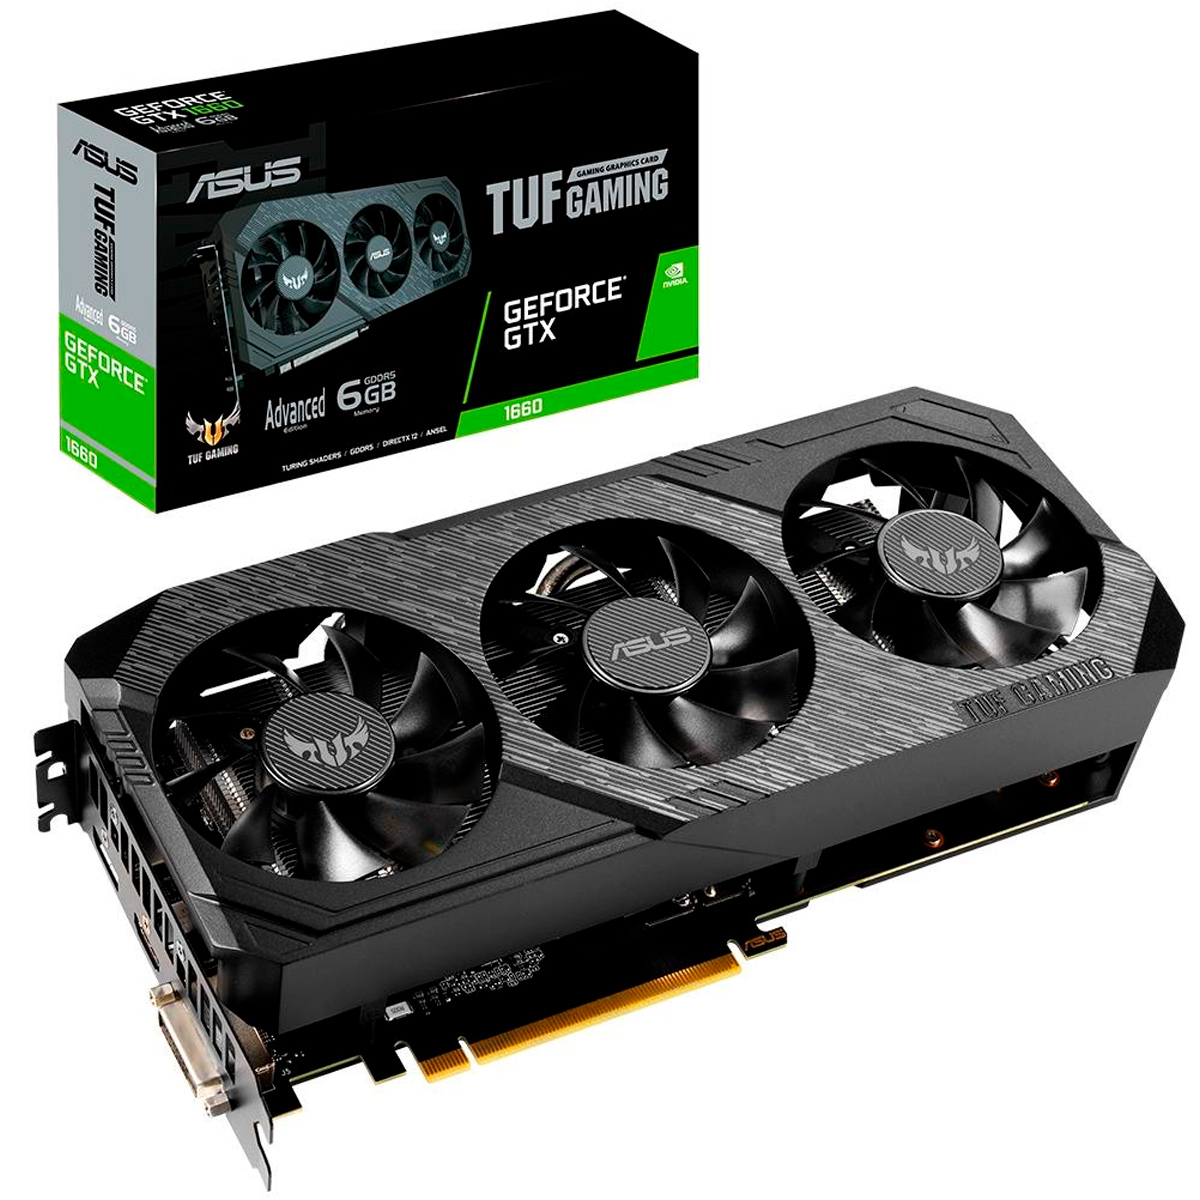 GeForce GTX 1660 6GB GDDR5 192bits - TUF Gaming X3 - Asus TUF3-GTX1660-A6G-GAMING